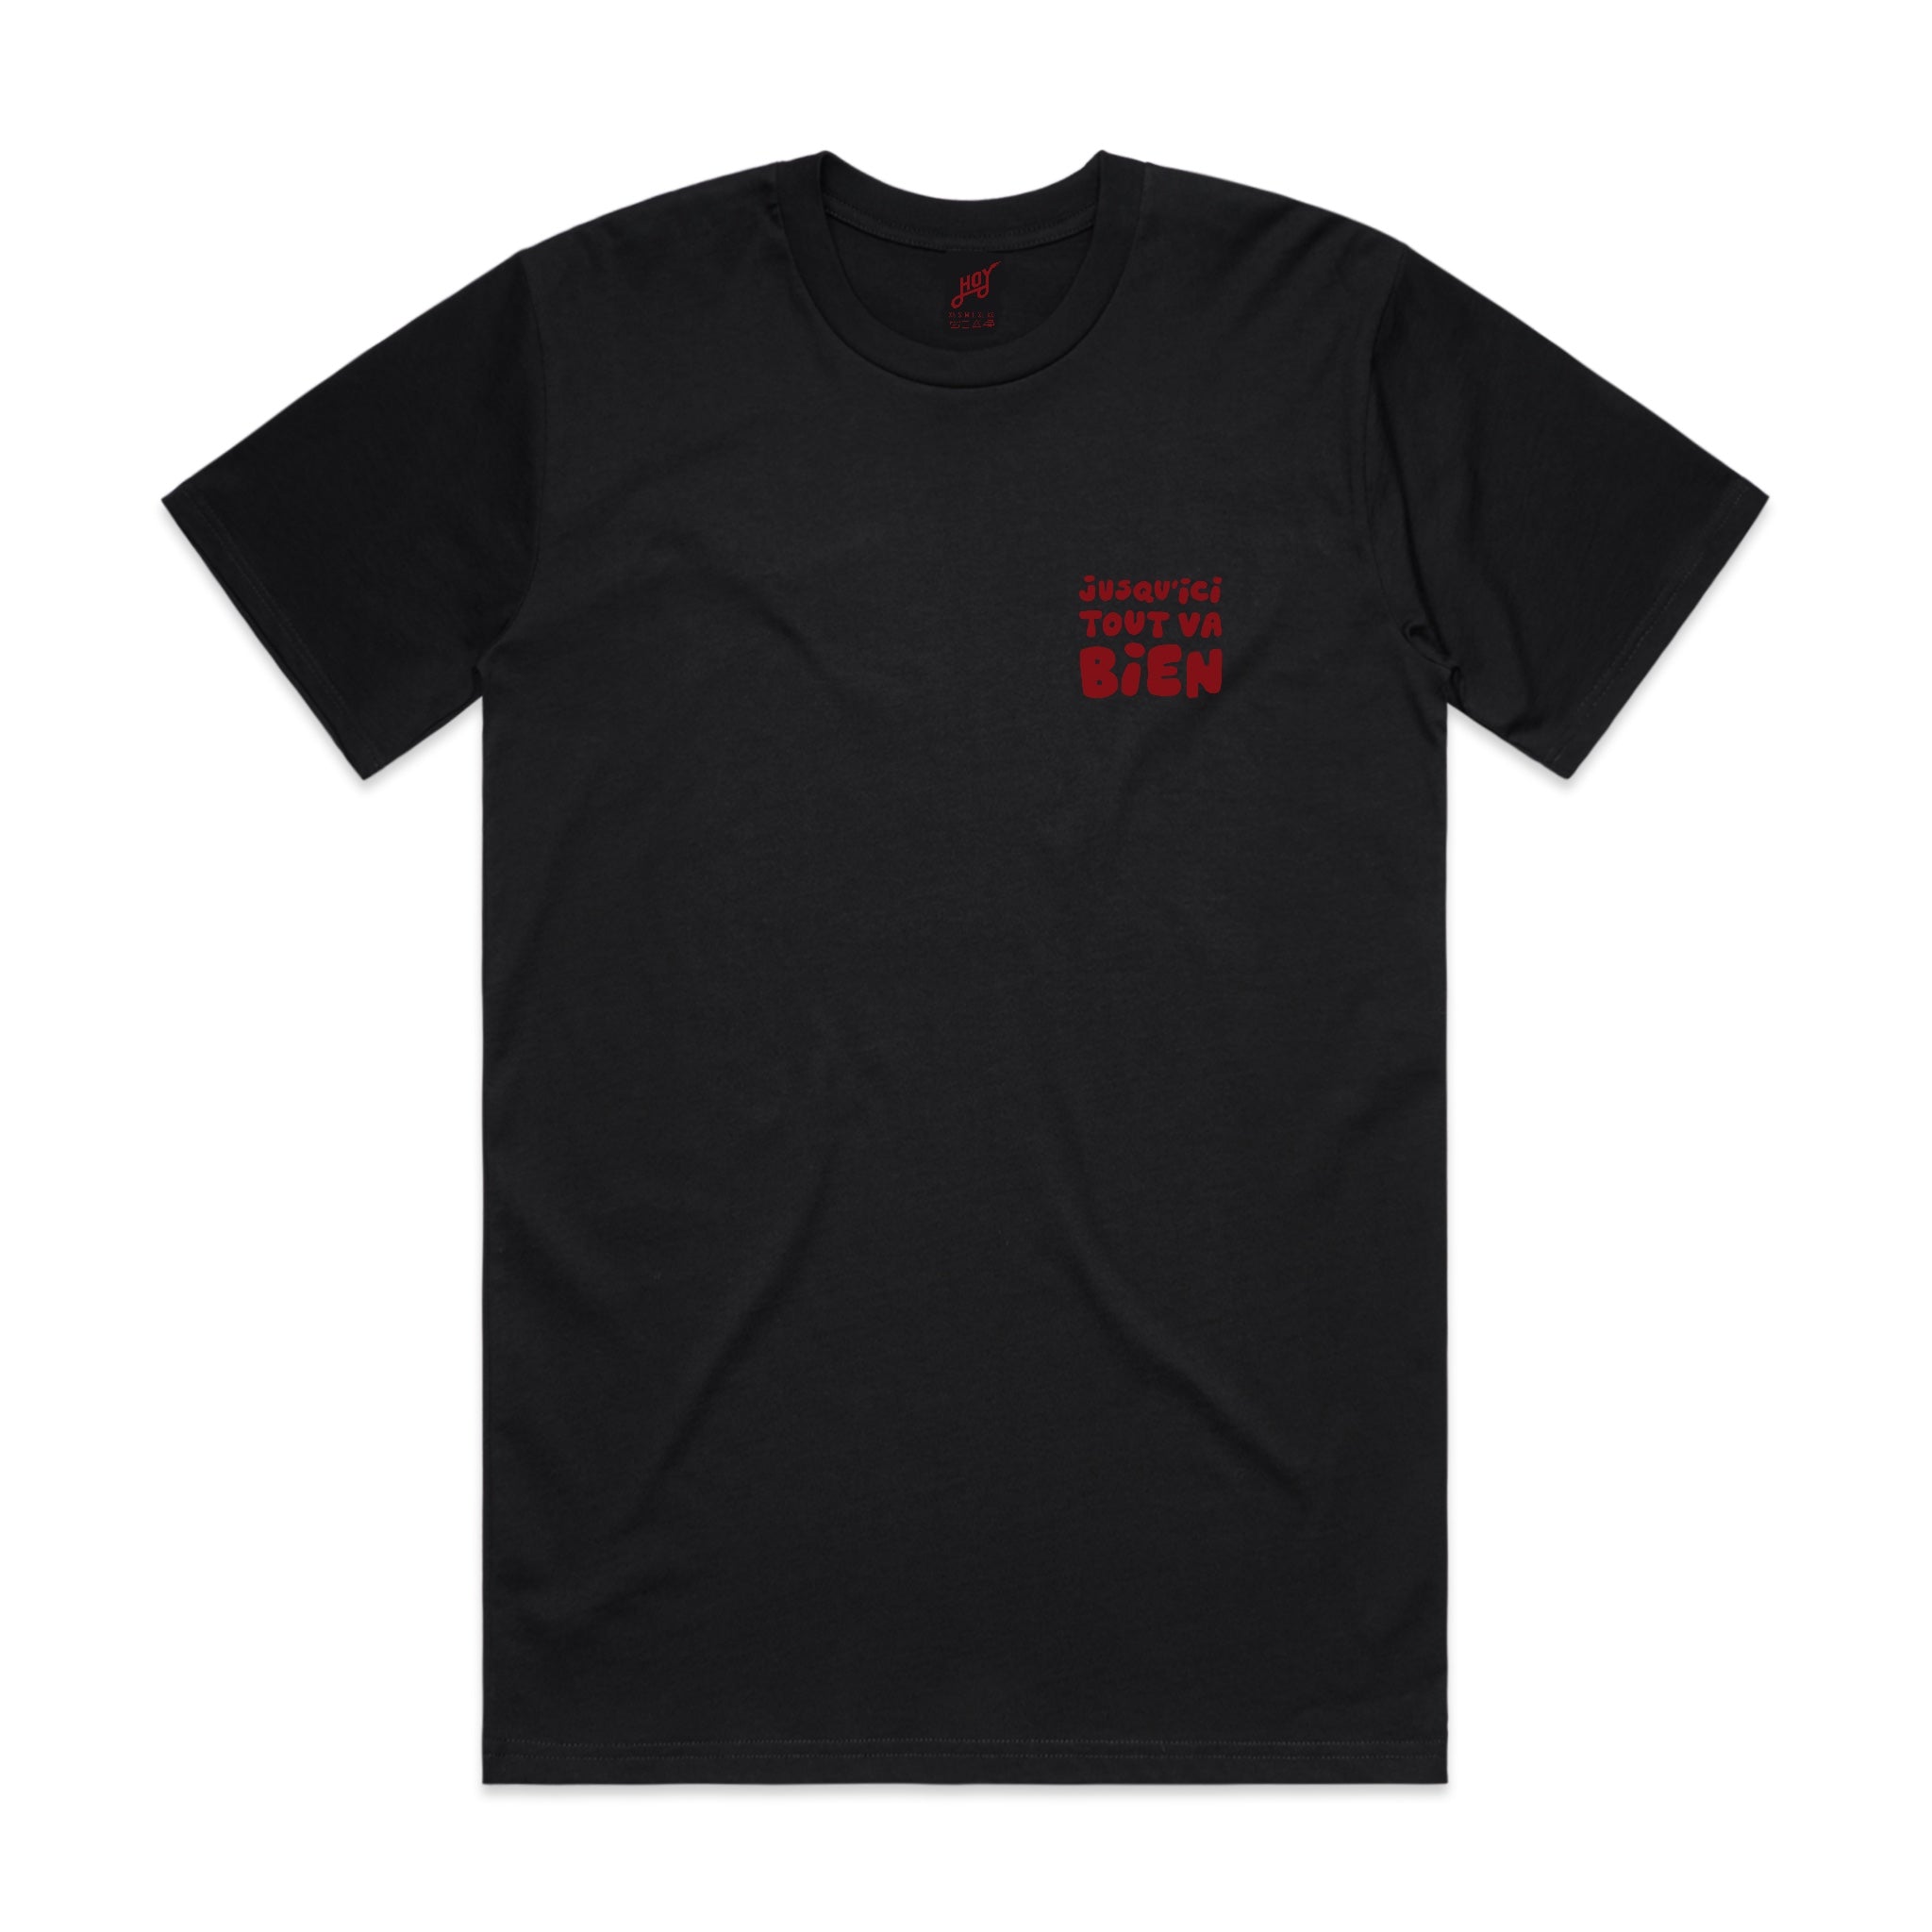 Hoy Jusqu'ici' Tout Va Bien Organic T-shirt - Black / Red